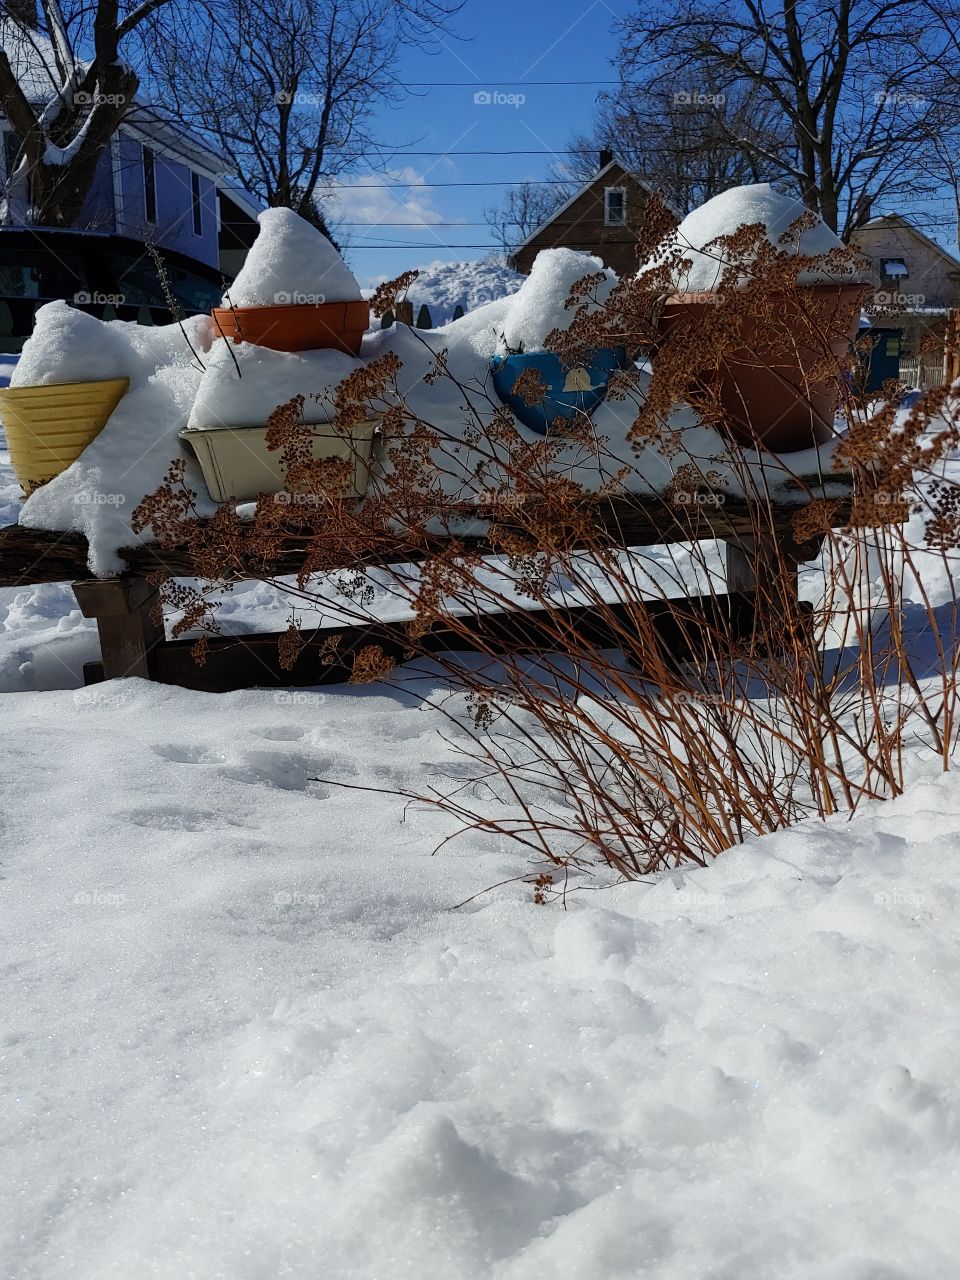 snow hats on flower pots